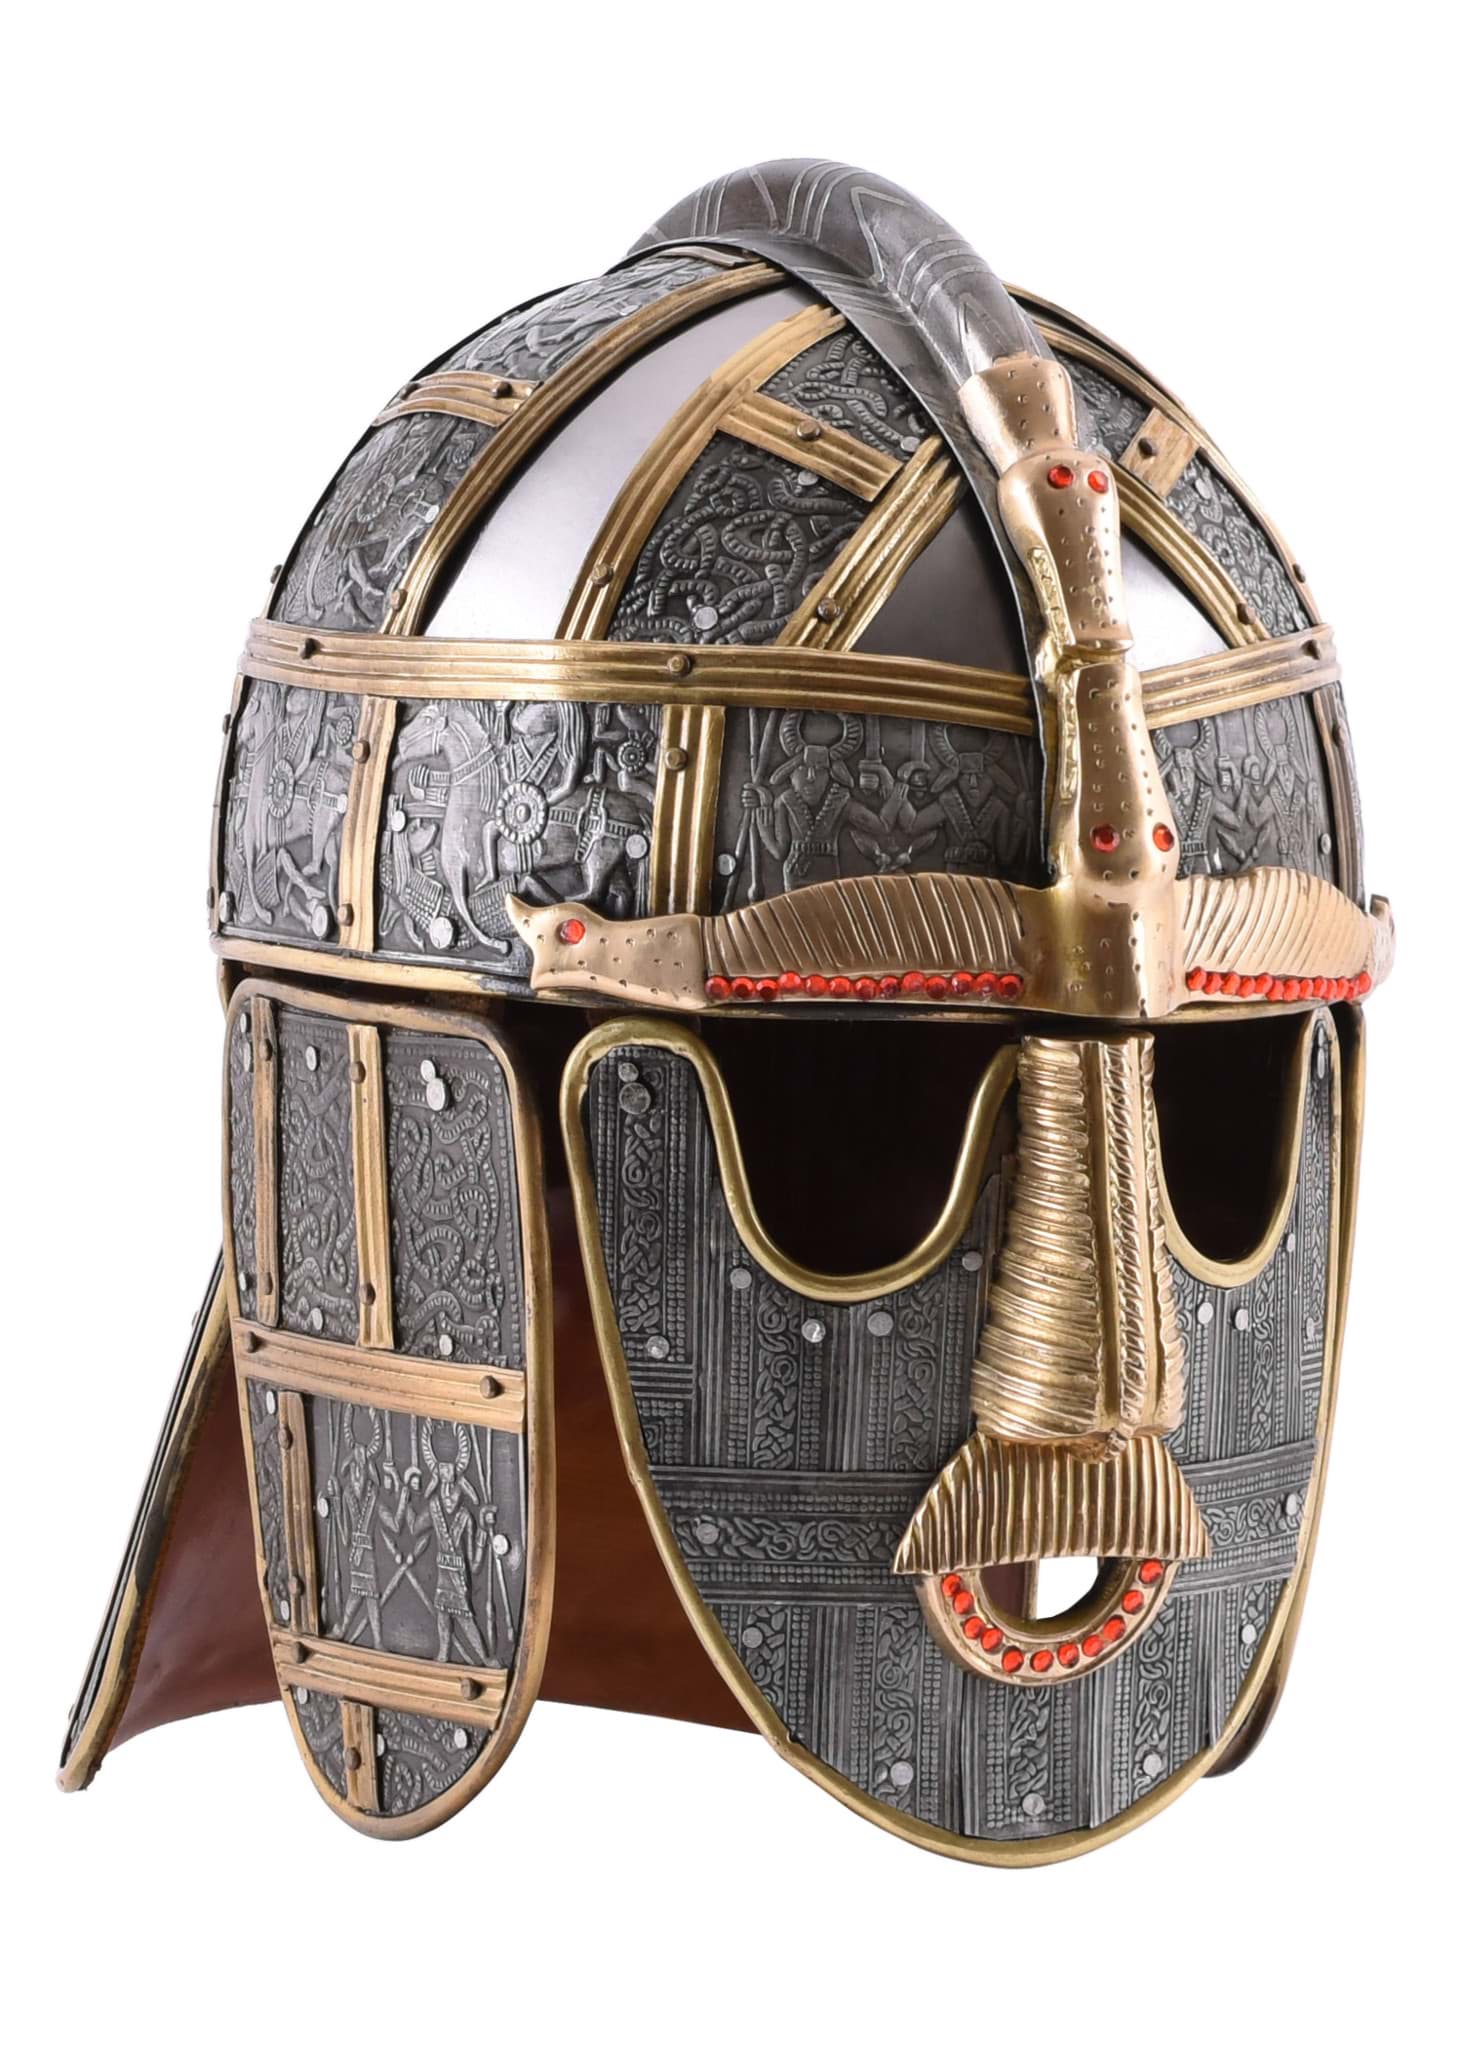 Picture of Battle Merchant - Sutton Hoo Helmet 7th Century